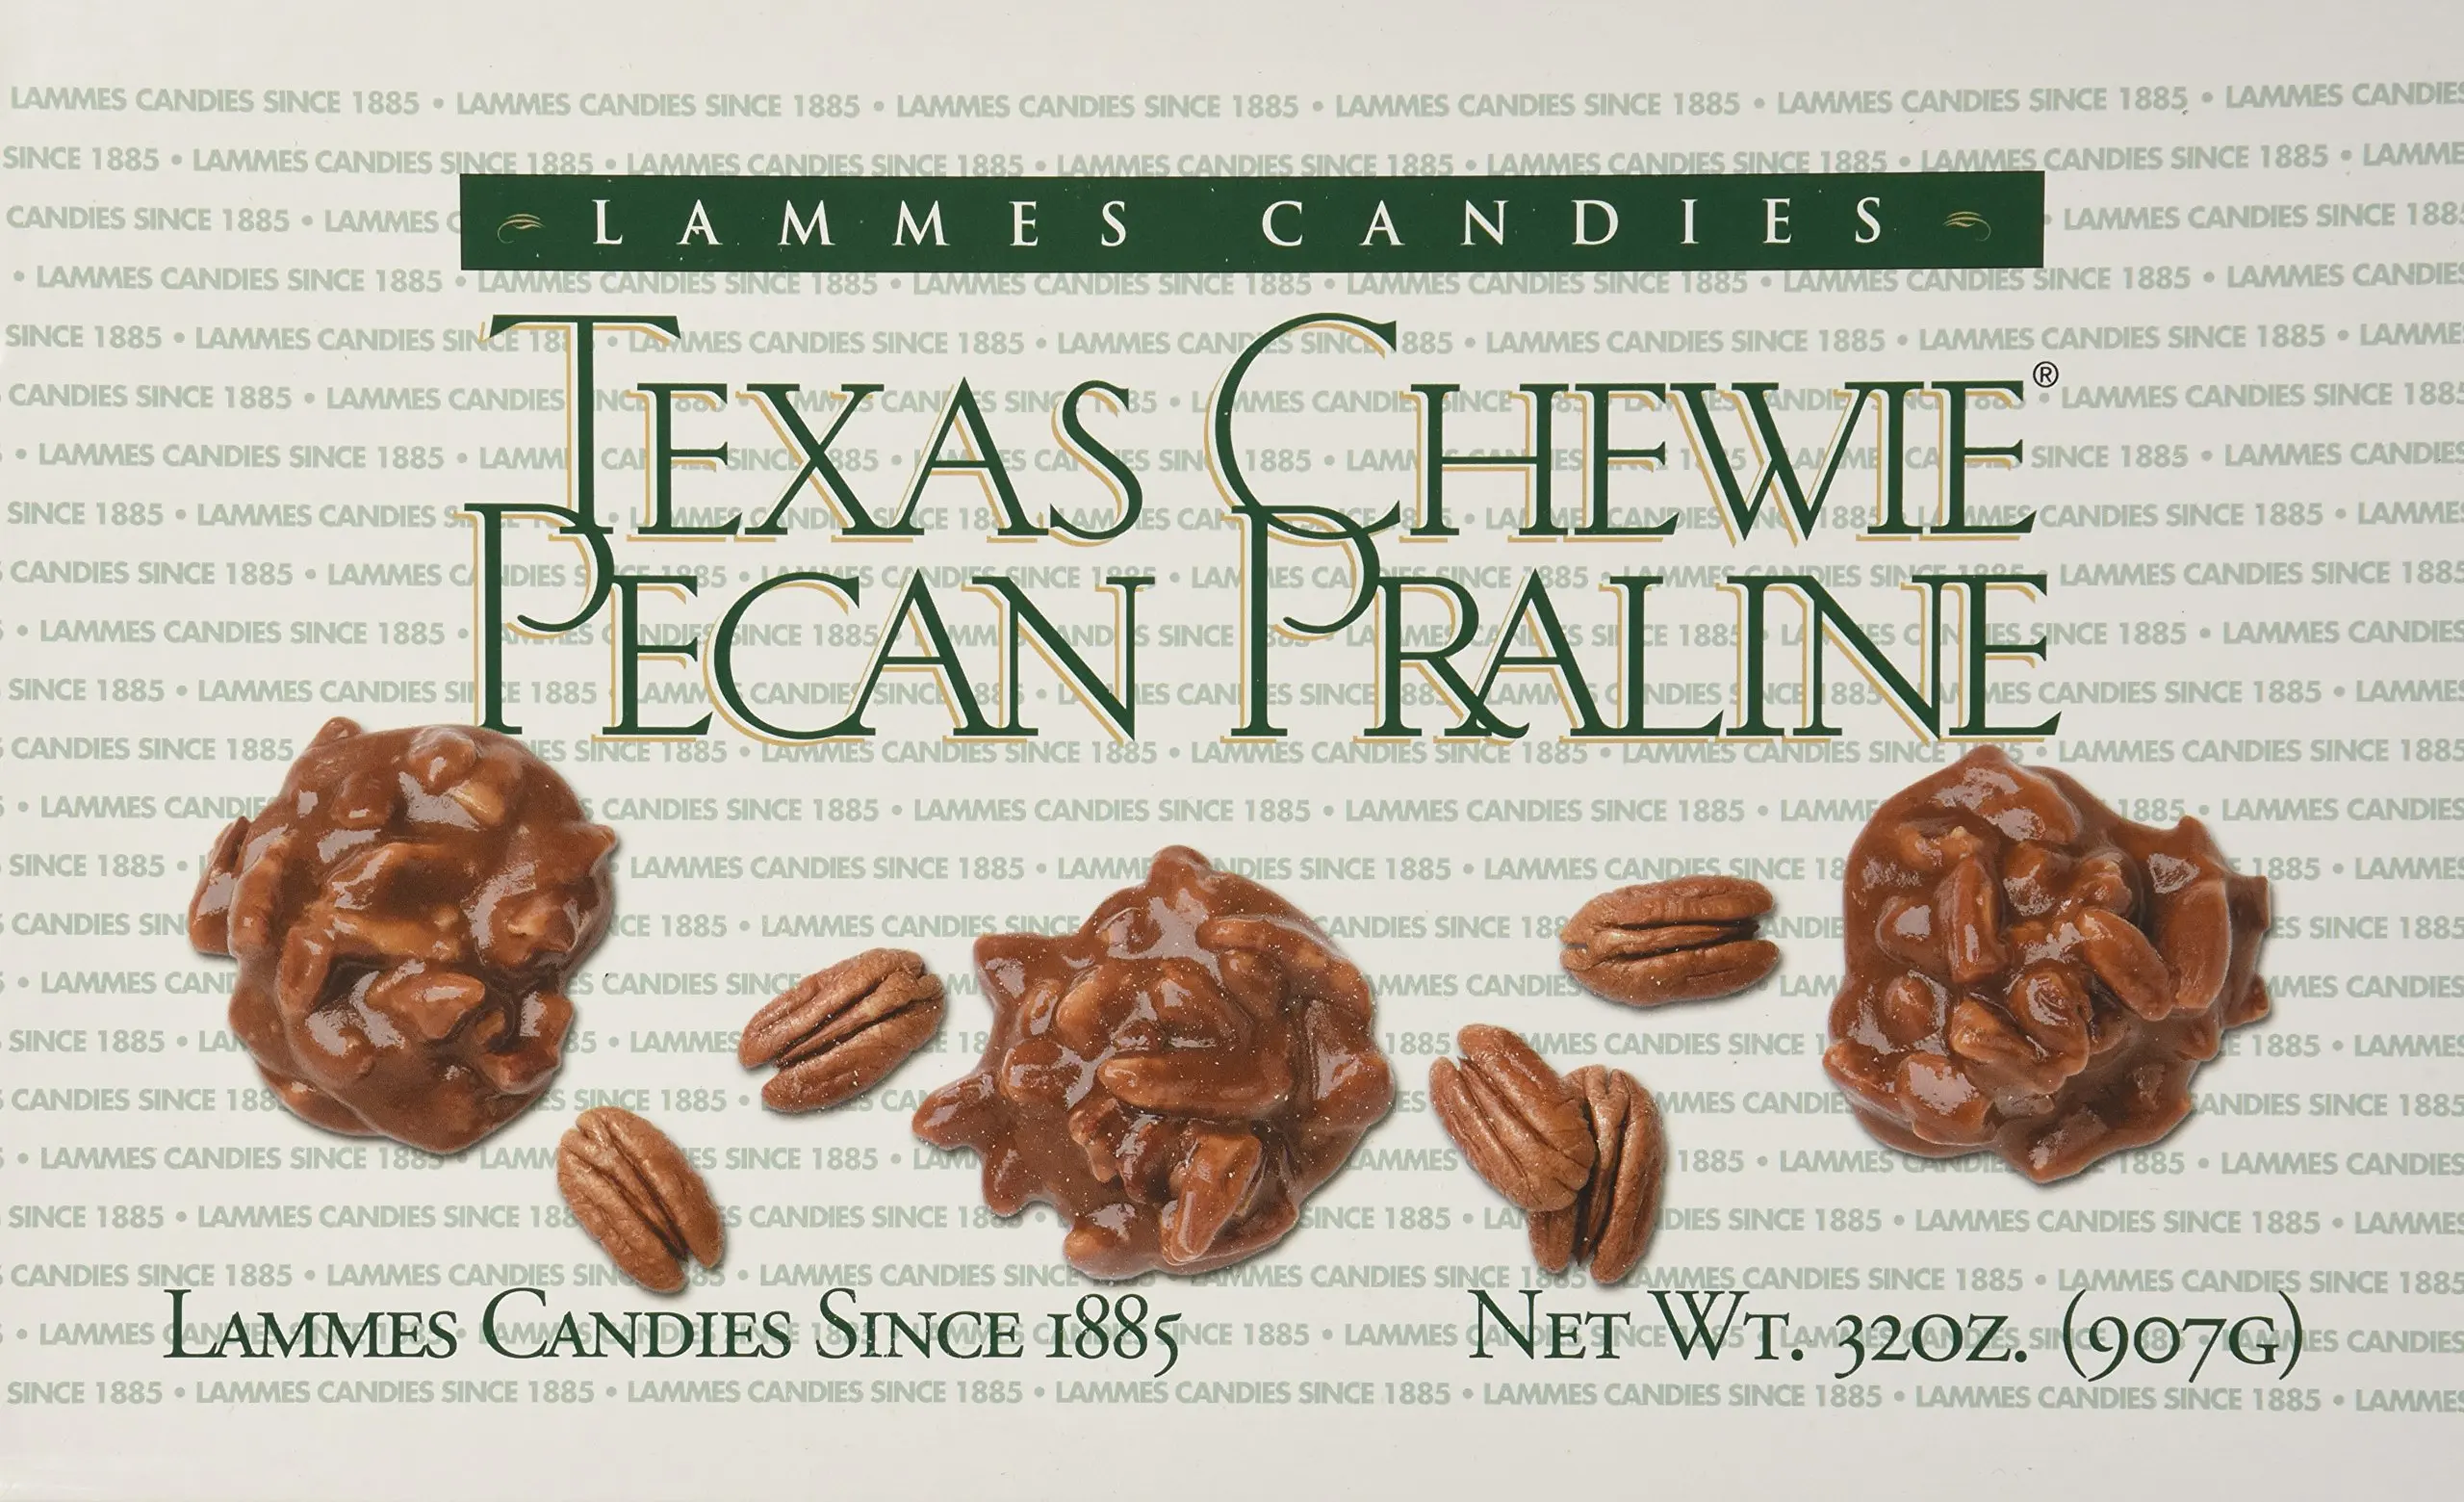 Lammes Candies Texas Chewie Pecan Pralines, 32 Oz Box. 